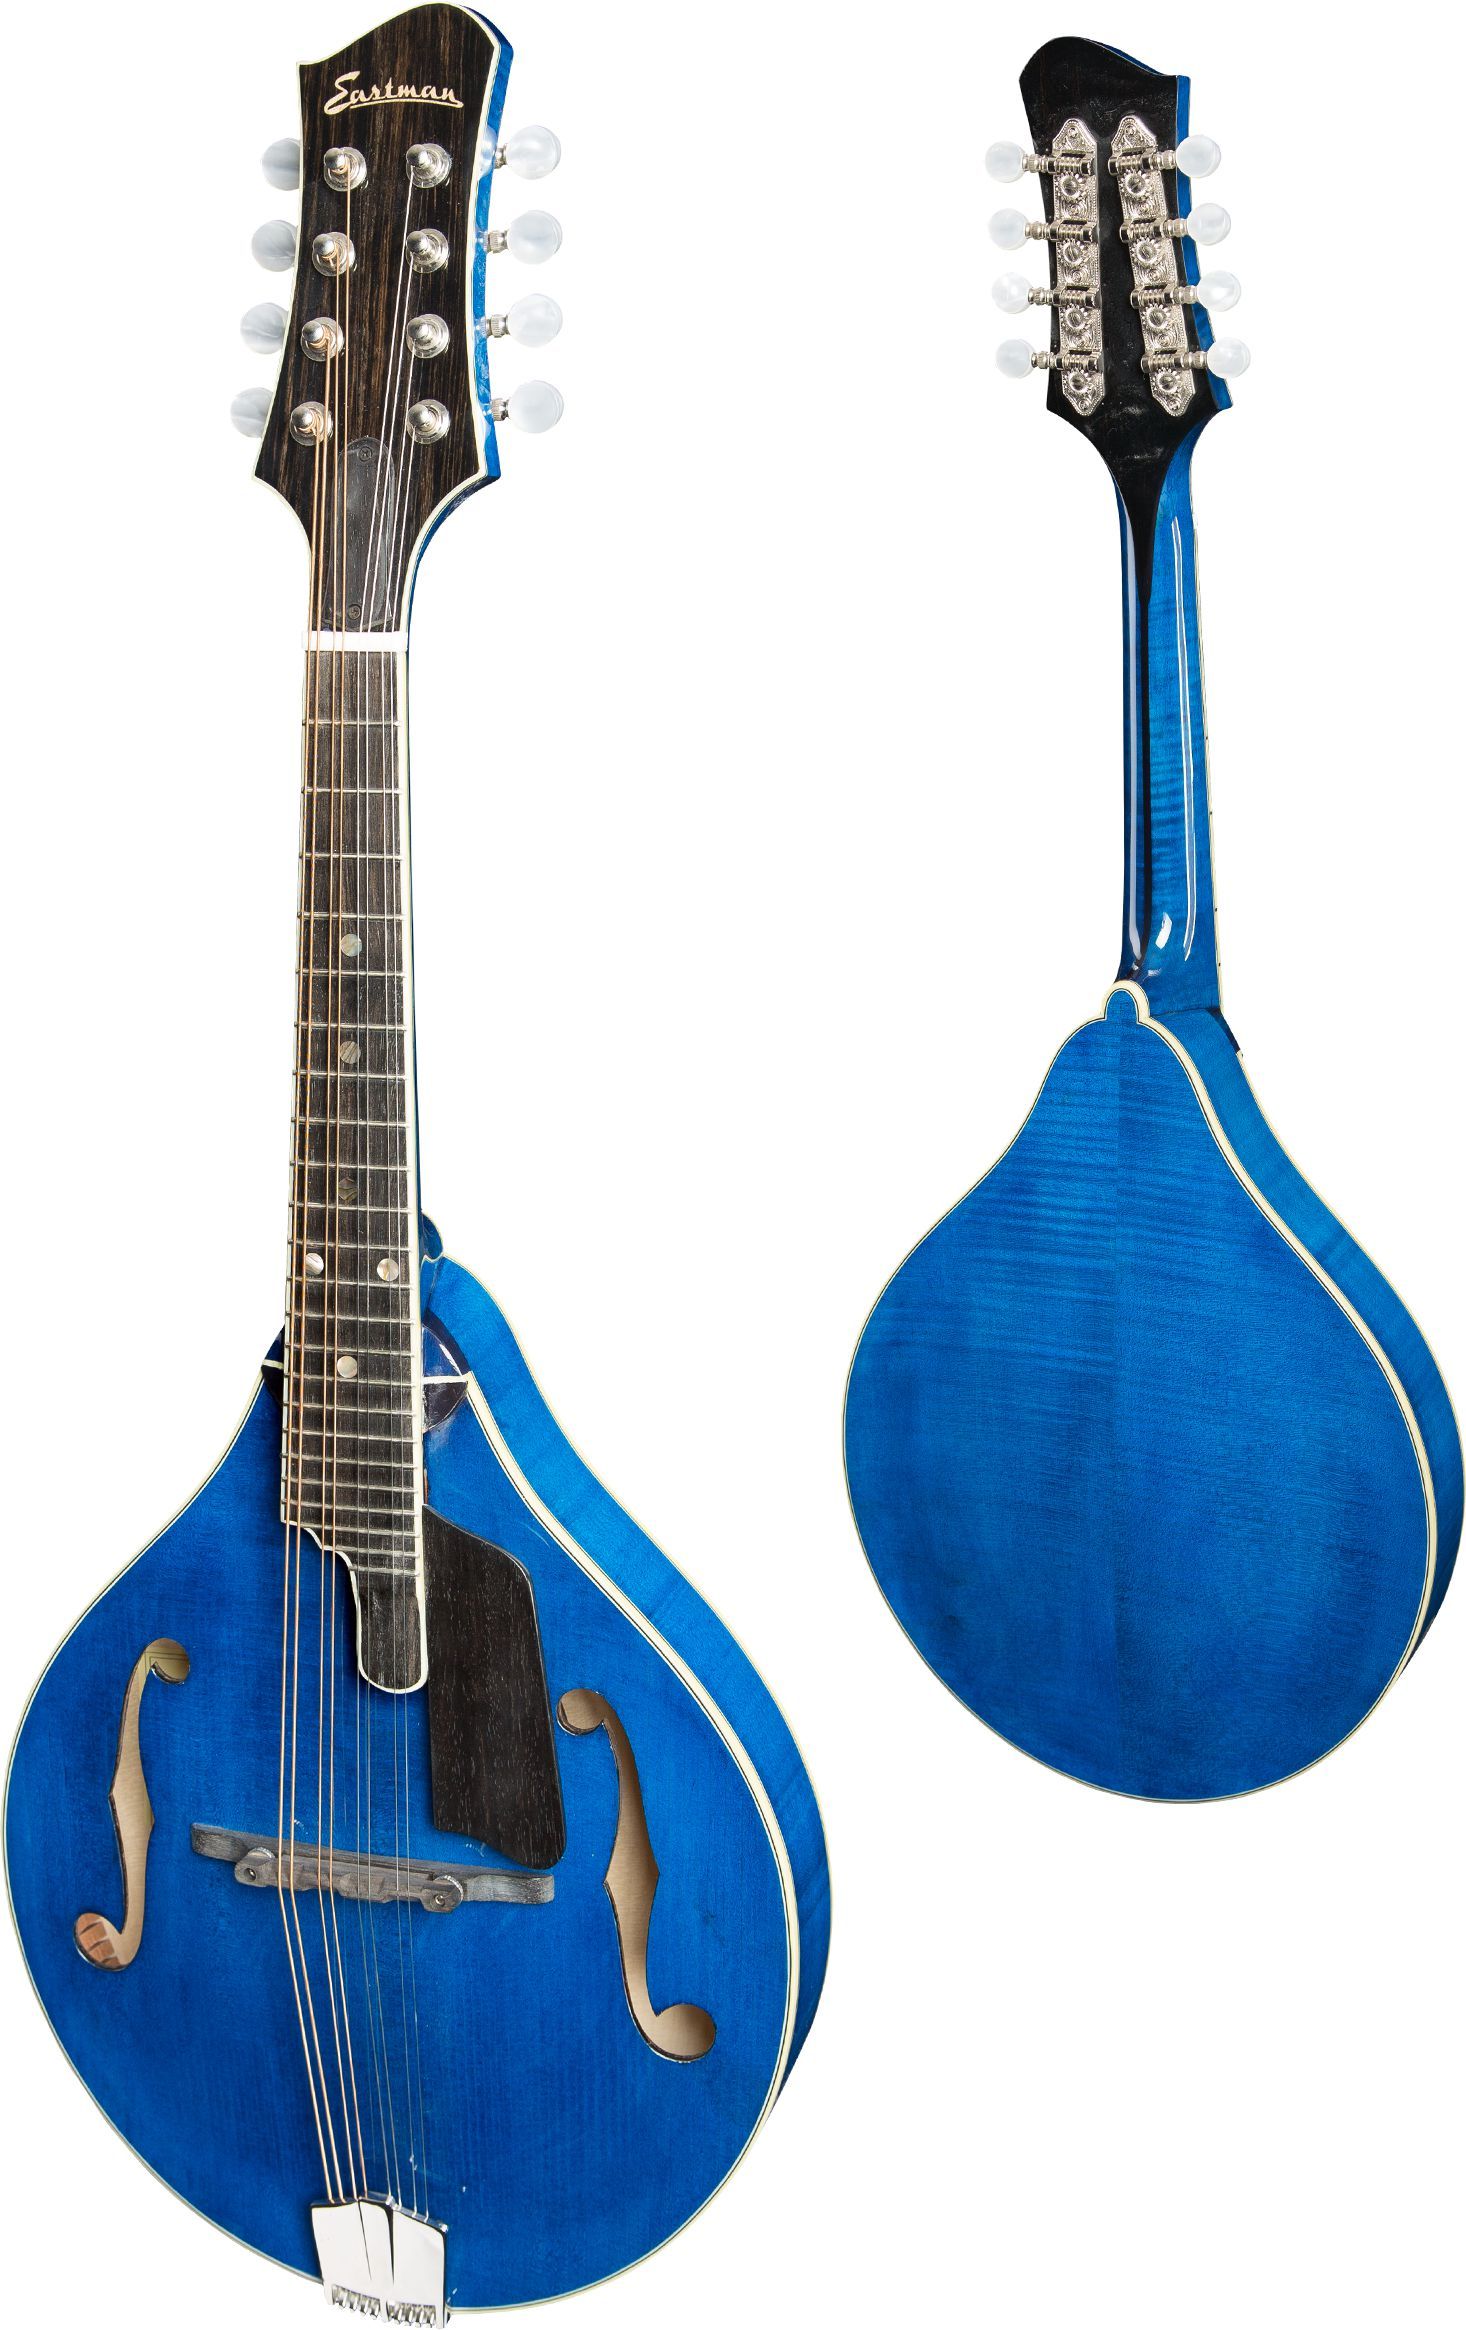 Eastman MD805PGE Same specs as MD805 Mandolin (but Honeyburst Gloss nitro finish and KnK twin mandolin pu, w/Case), Mandolin for sale at Richards Guitars.